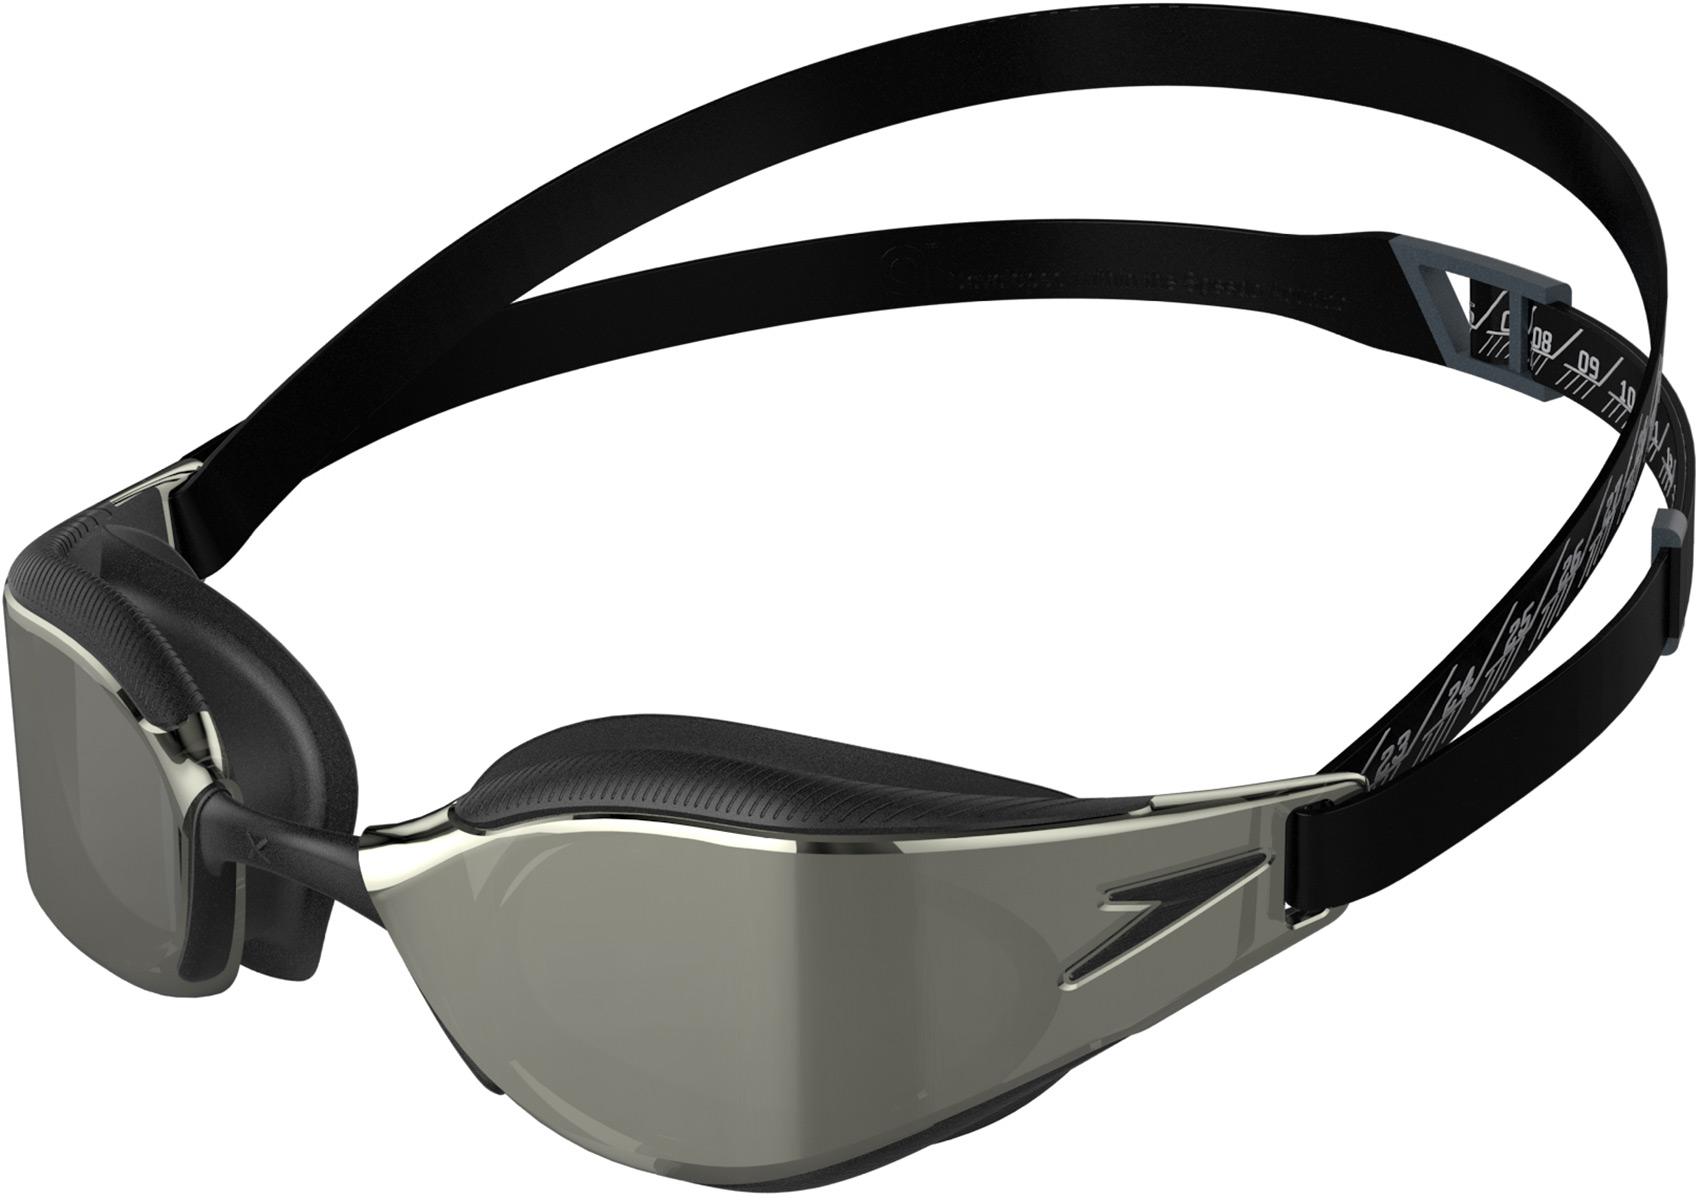 Speedo Fastskin Hyper Elite Mirror Goggles - Black/oxid Grey/chrome